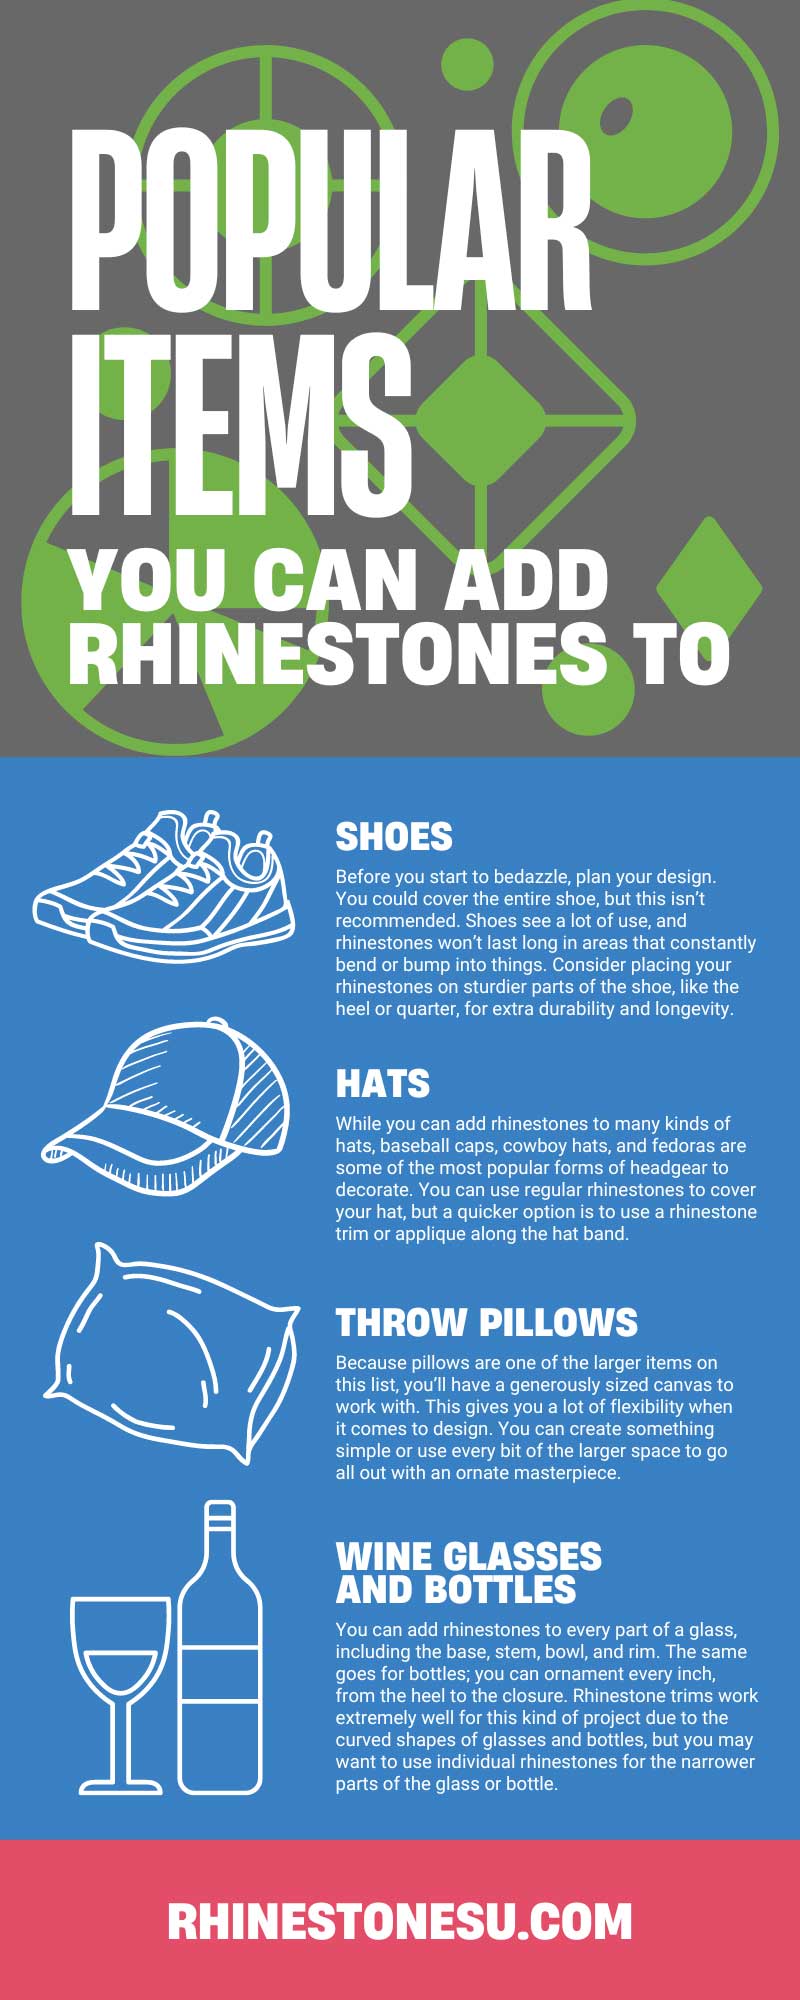 10 Popular Items You Can Add Rhinestones To - Rhinestones Unlimited